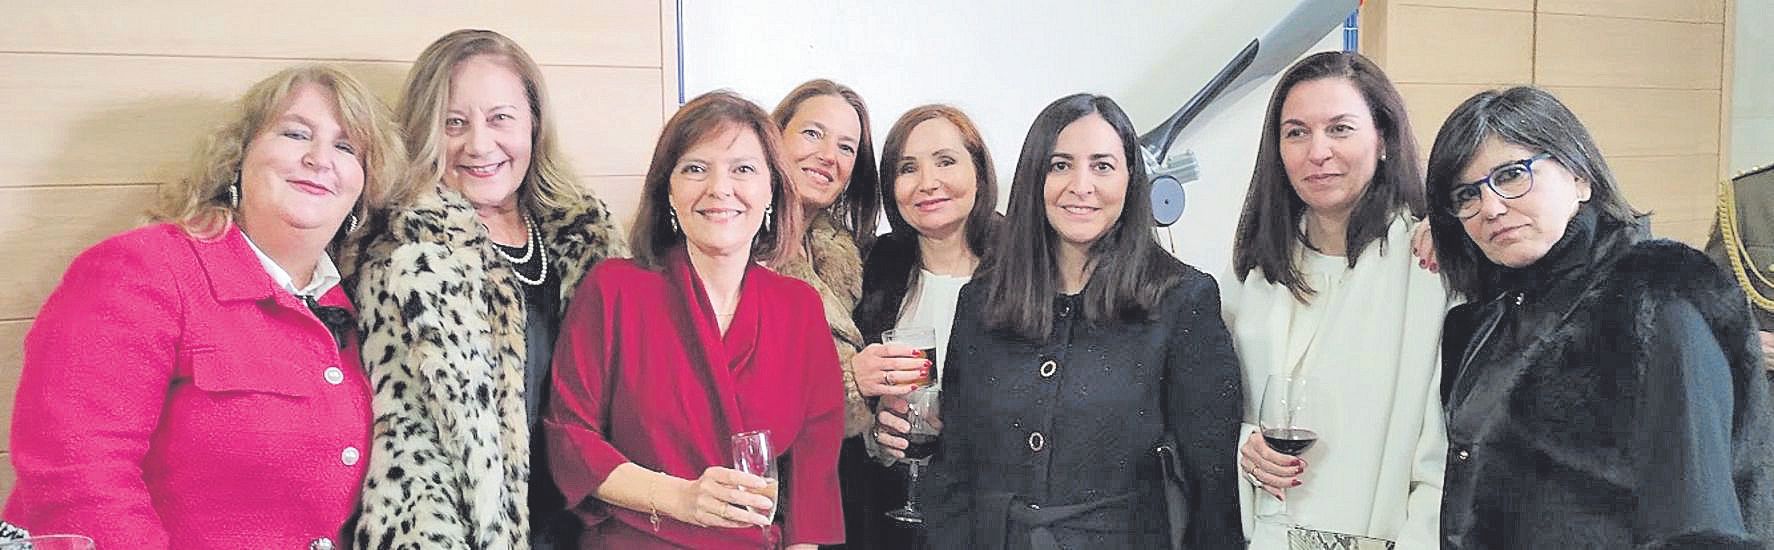 María Jesús, Águeda, Elvira, Pilar, Mamem, Susana, Cuca y Eugenia.